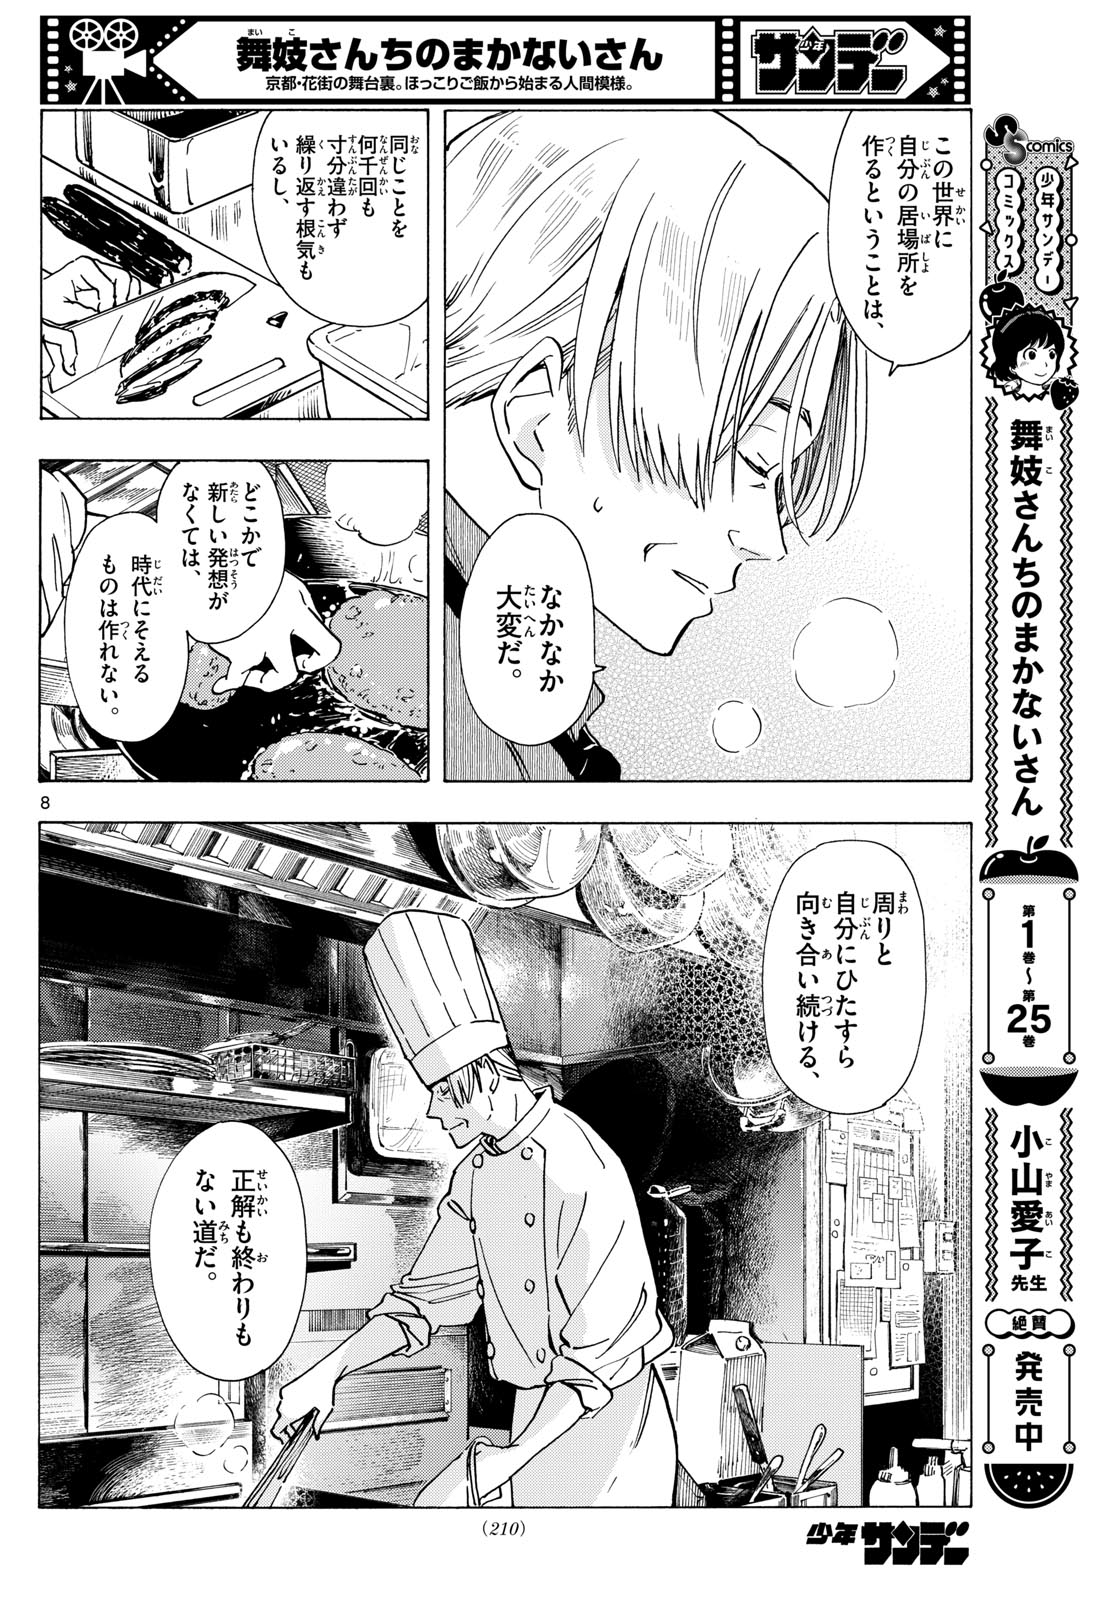 Maiko-san Chi no Makanai-san - Chapter 295 - Page 8